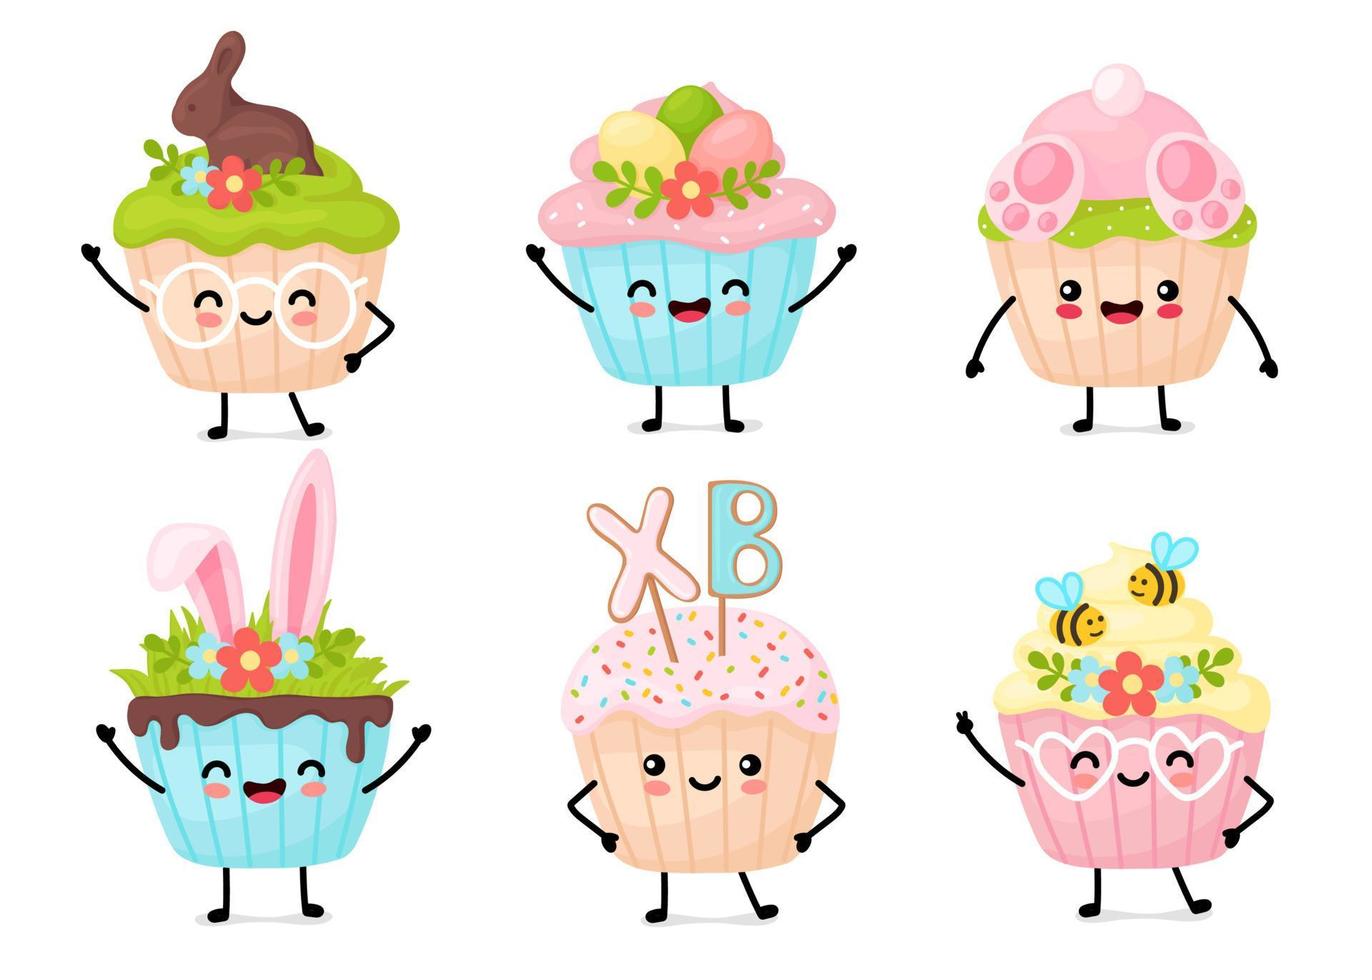 cupcakes de páscoa kawaii fofos em estilo cartoon vetor